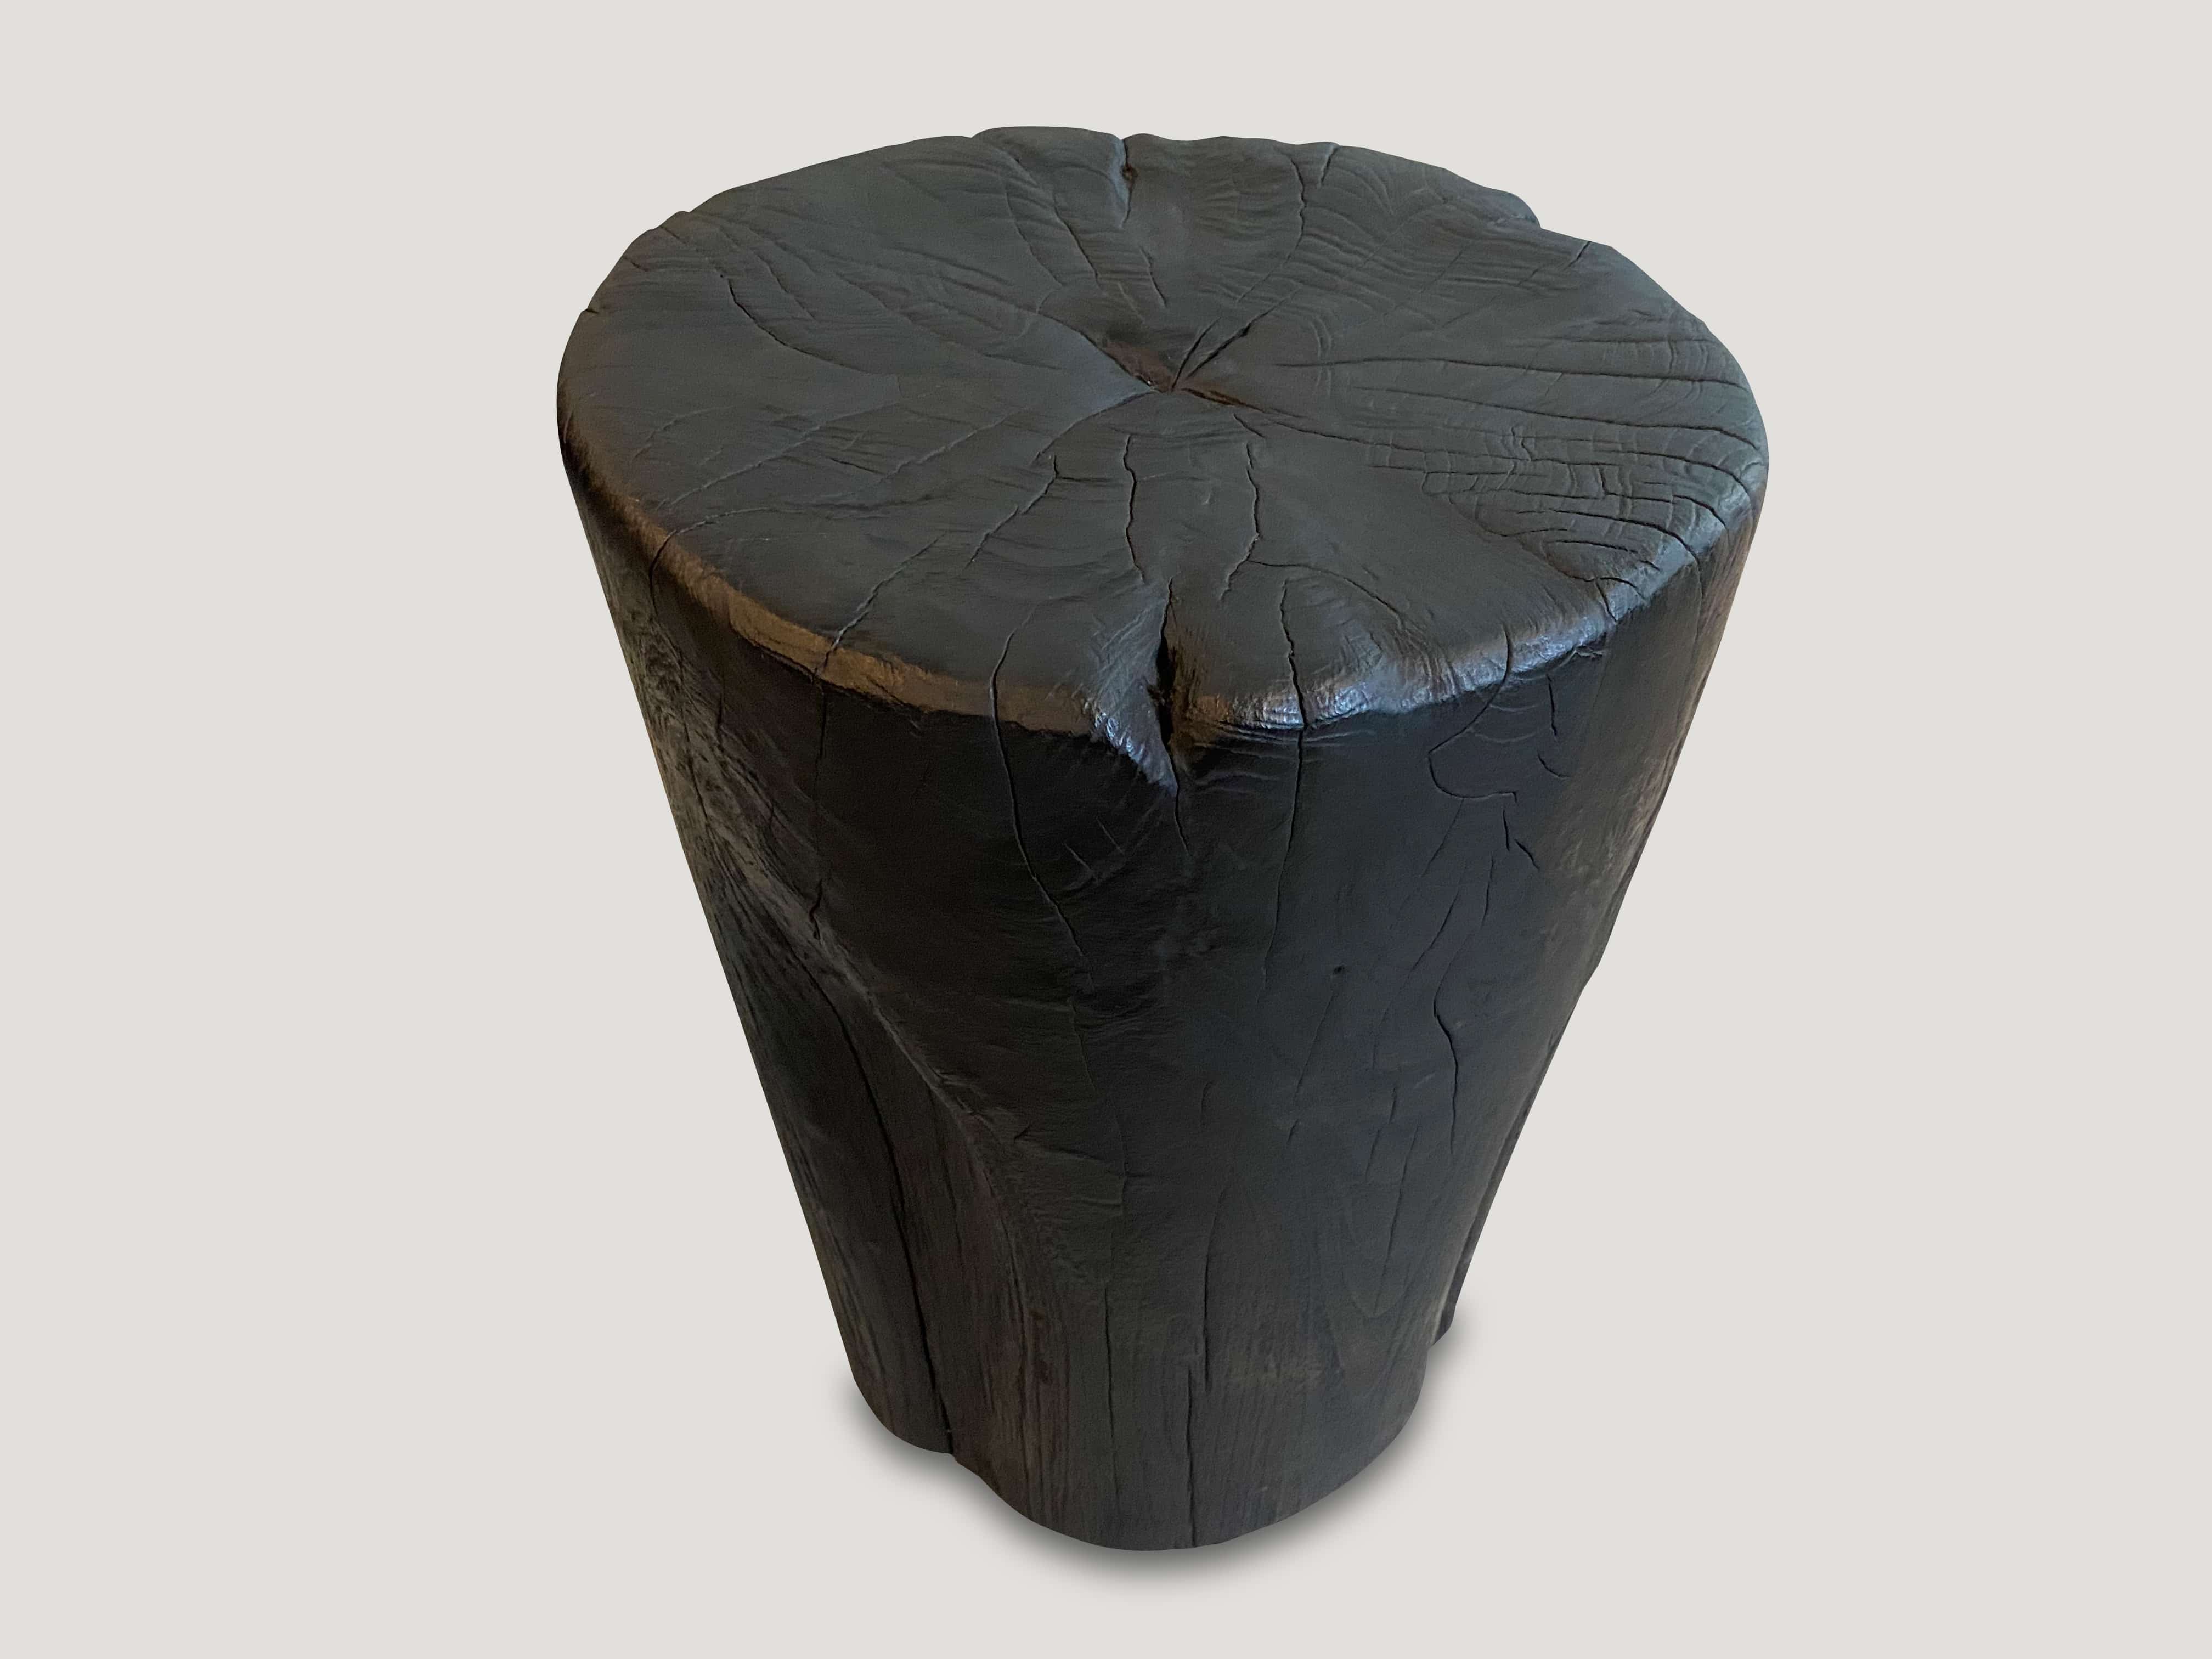 Reclaimed teak wood side table or stool